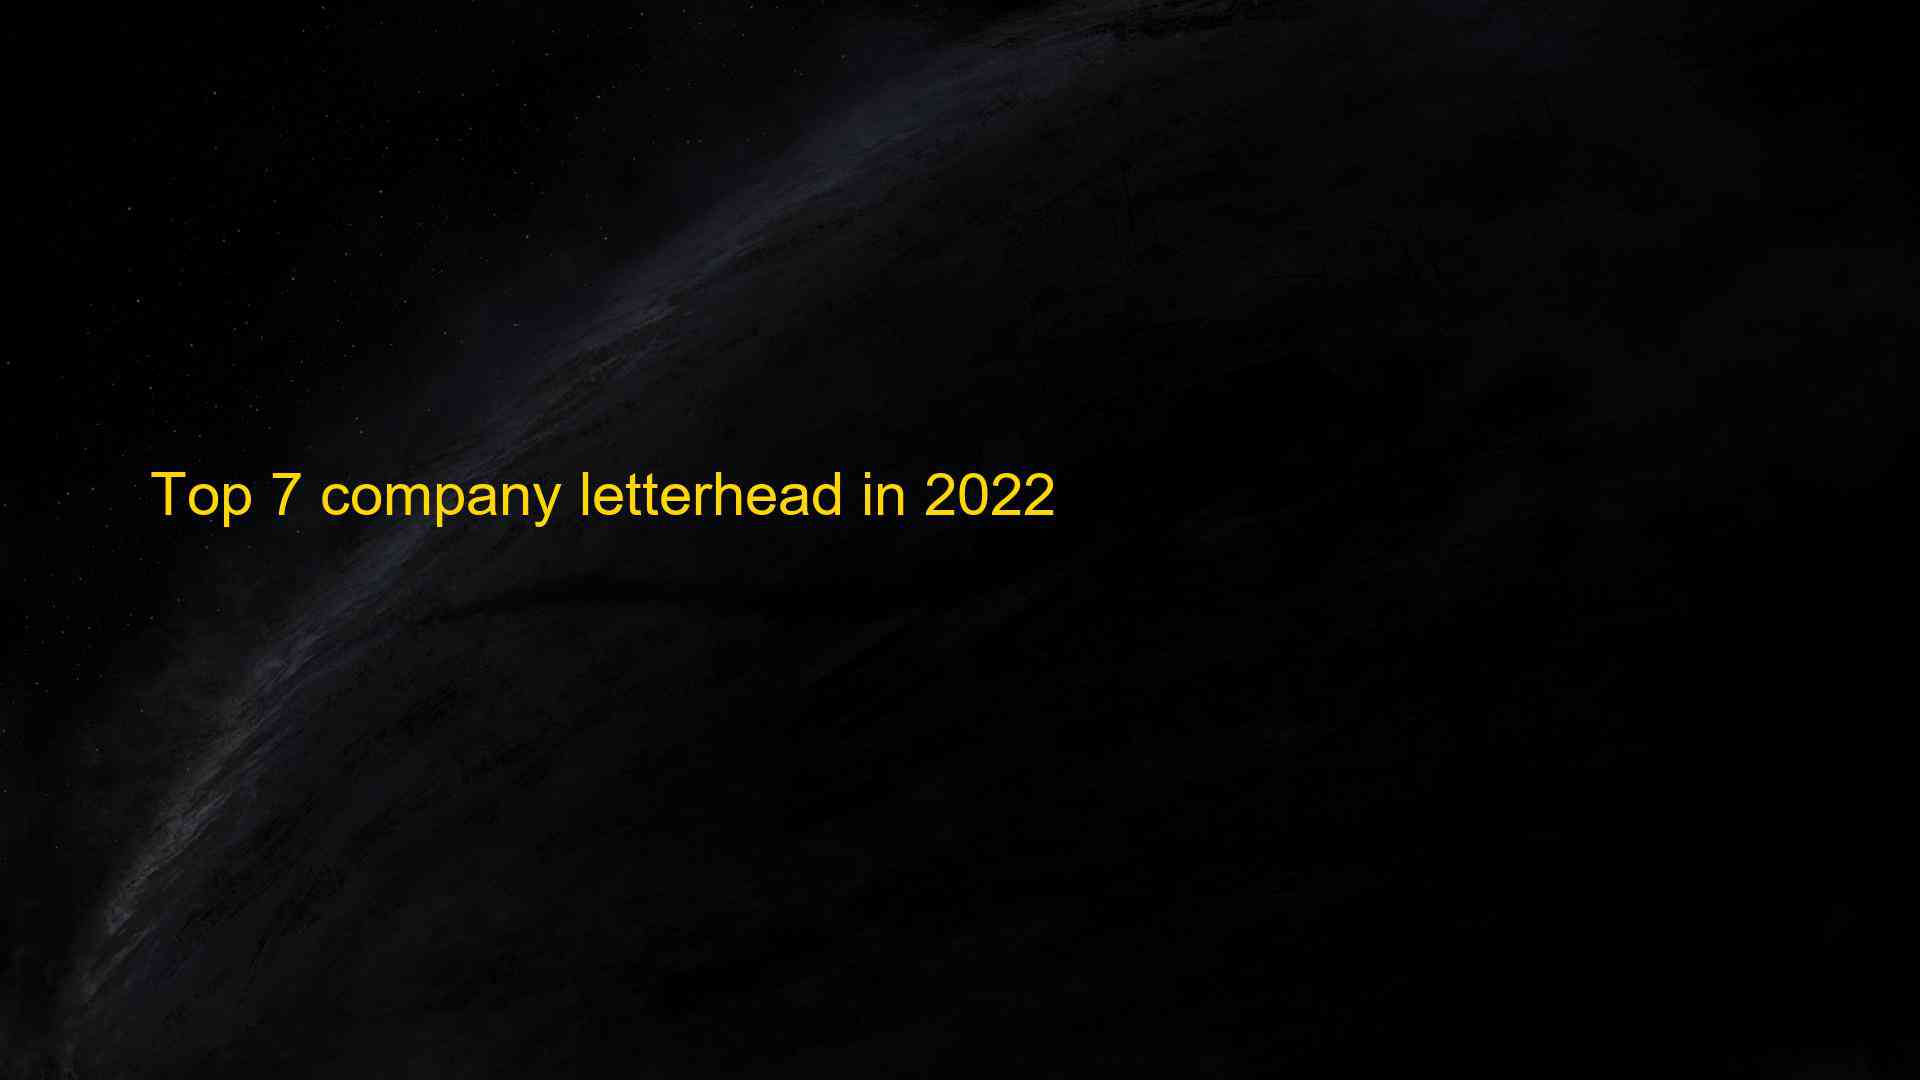 Top 7 company letterhead in 2022 1659492056